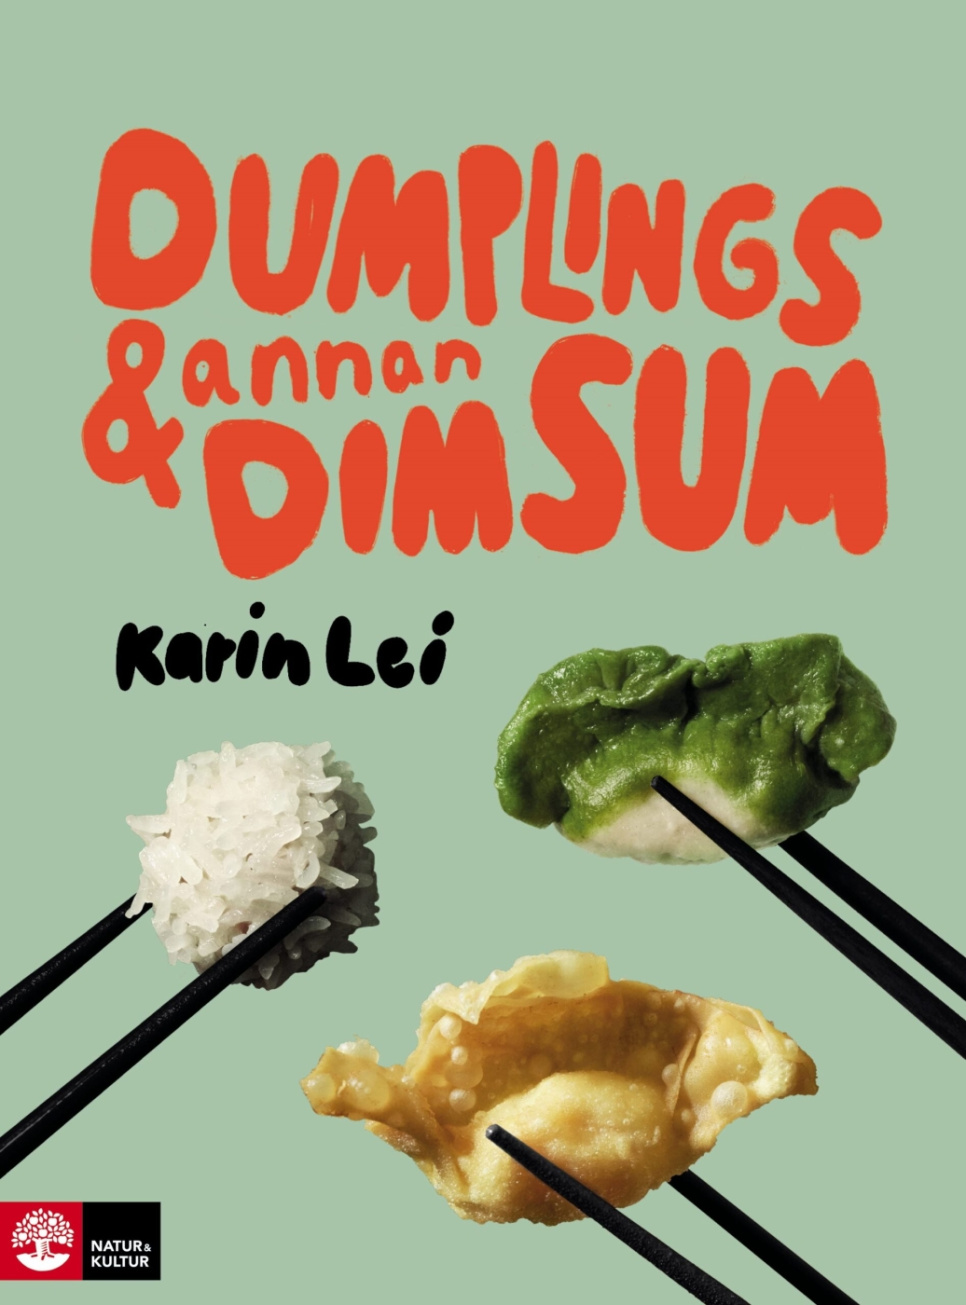 Dumplings & annan dim sum av Karin Lei i gruppen Madlavning / Kogebøger / Vegetarisk hos The Kitchen Lab (1355-27176)